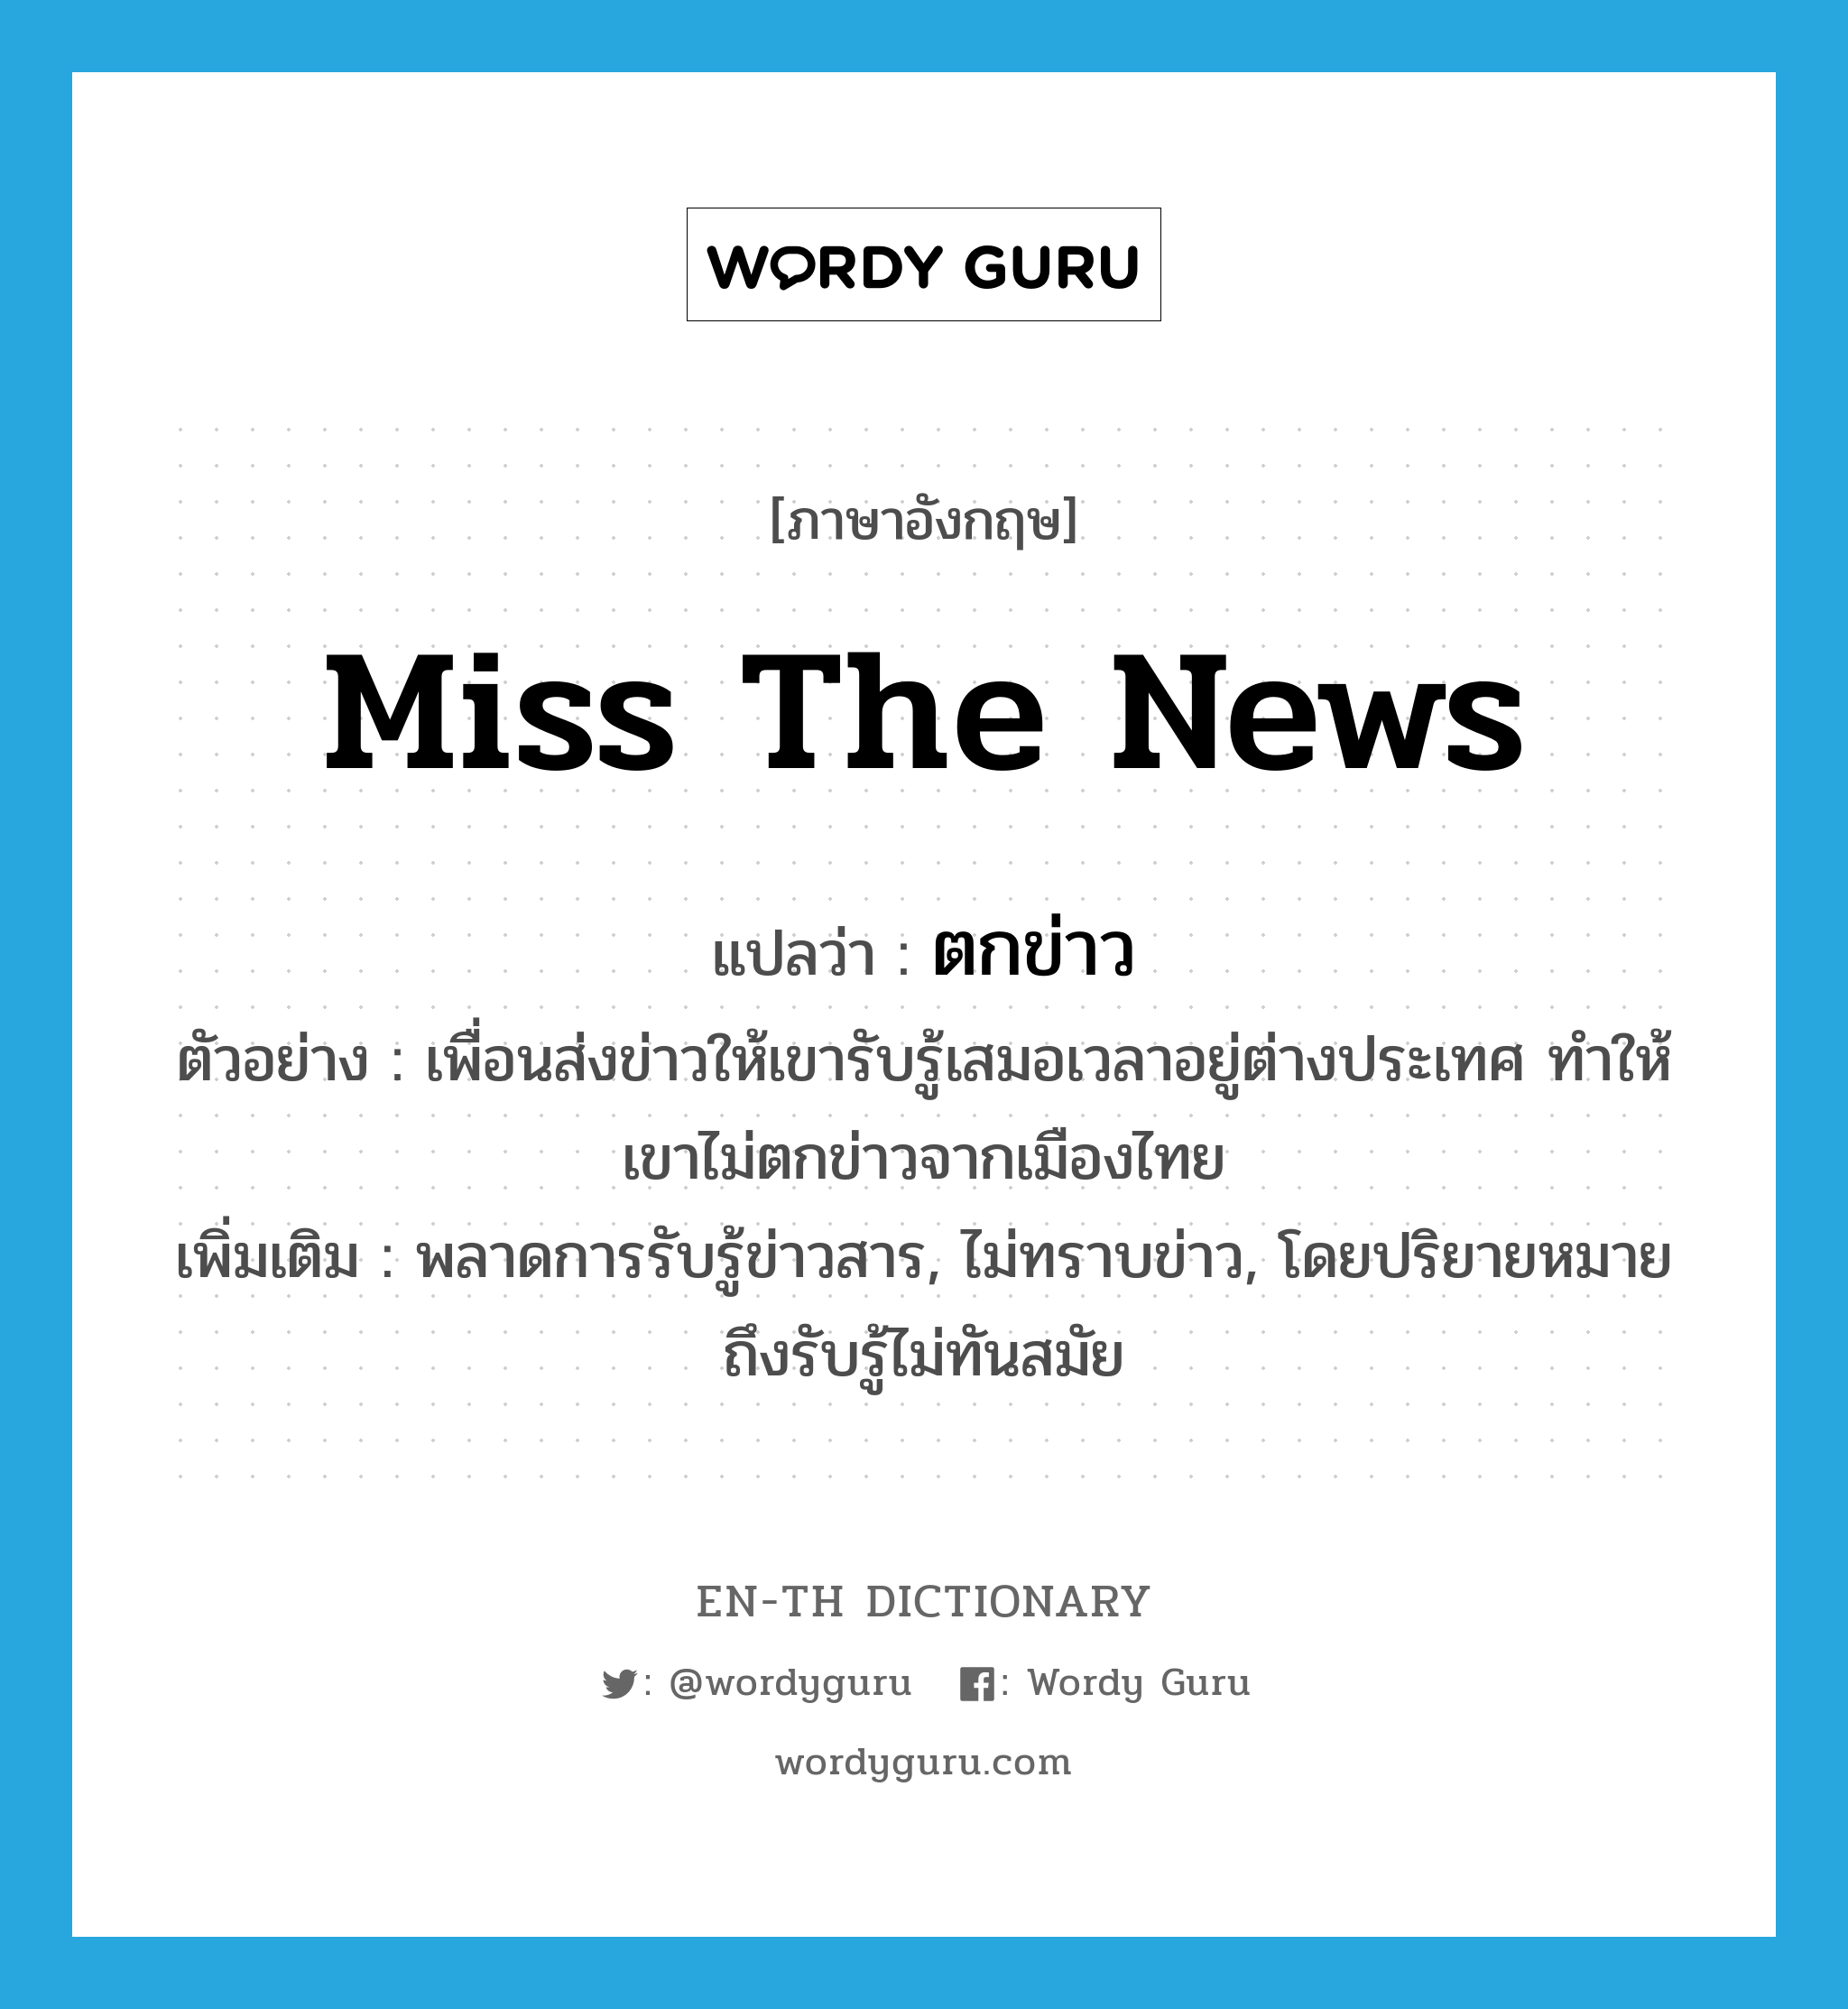 miss the news แปลว่า?, คำศัพท์ภาษาอังกฤษ miss the news แปลว่า ตกข่าว ประเภท V ตัวอย่าง เพื่อนส่งข่าวให้เขารับรู้เสมอเวลาอยู่ต่างประเทศ ทำให้เขาไม่ตกข่าวจากเมืองไทย เพิ่มเติม พลาดการรับรู้ข่าวสาร, ไม่ทราบข่าว, โดยปริยายหมายถึงรับรู้ไม่ทันสมัย หมวด V